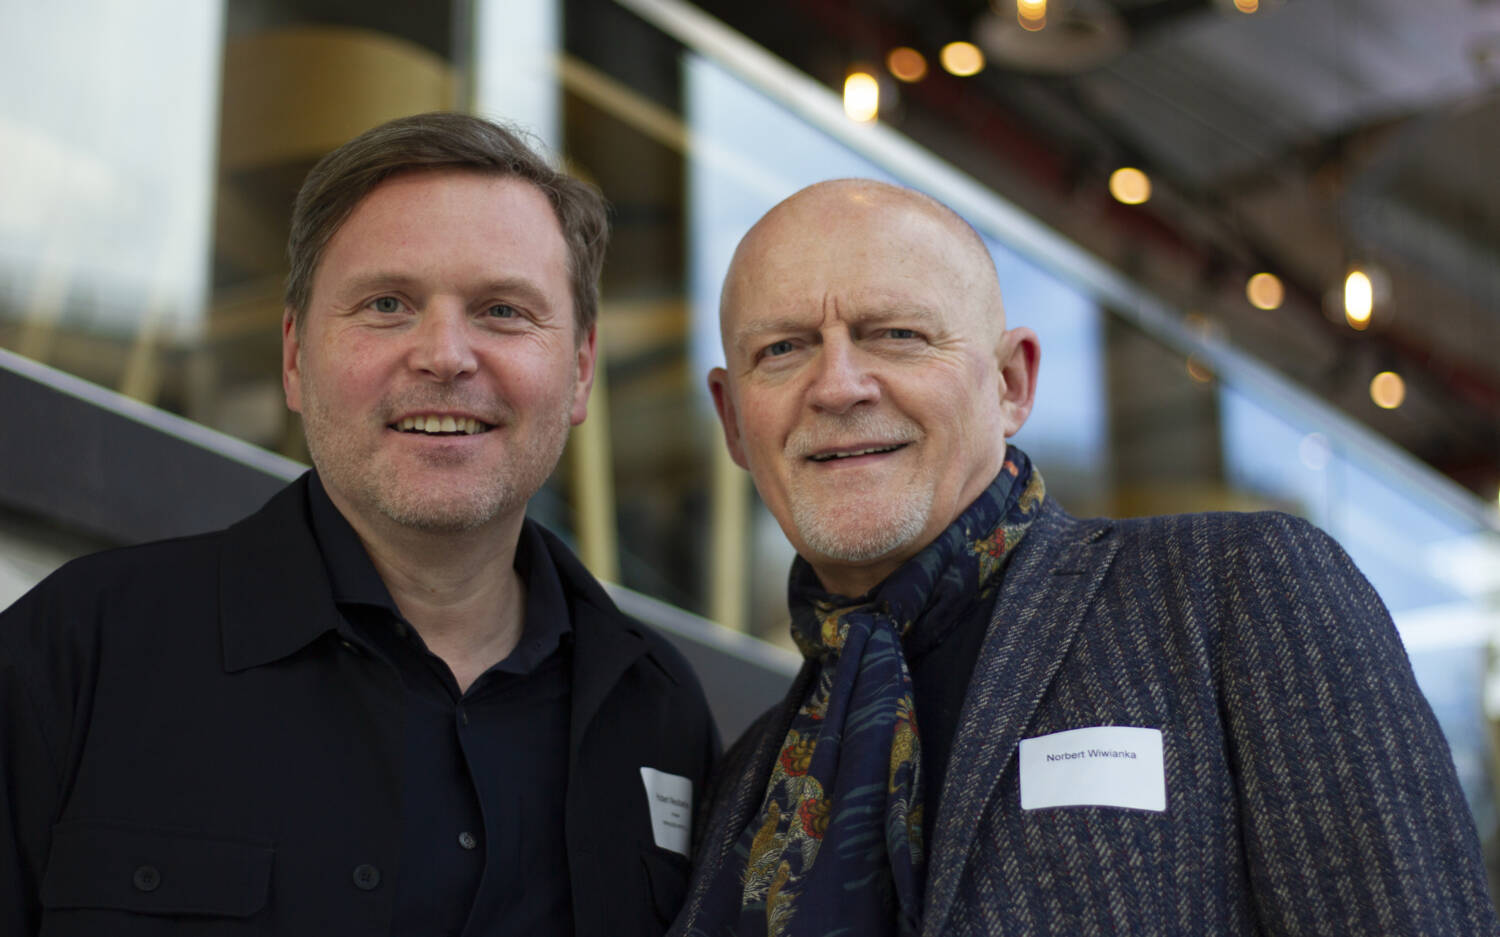 Hubert Neubacher, Inhaber Barkassen Meyer, mit Partner Norbert Wiwianka / ©Johanna Zobel